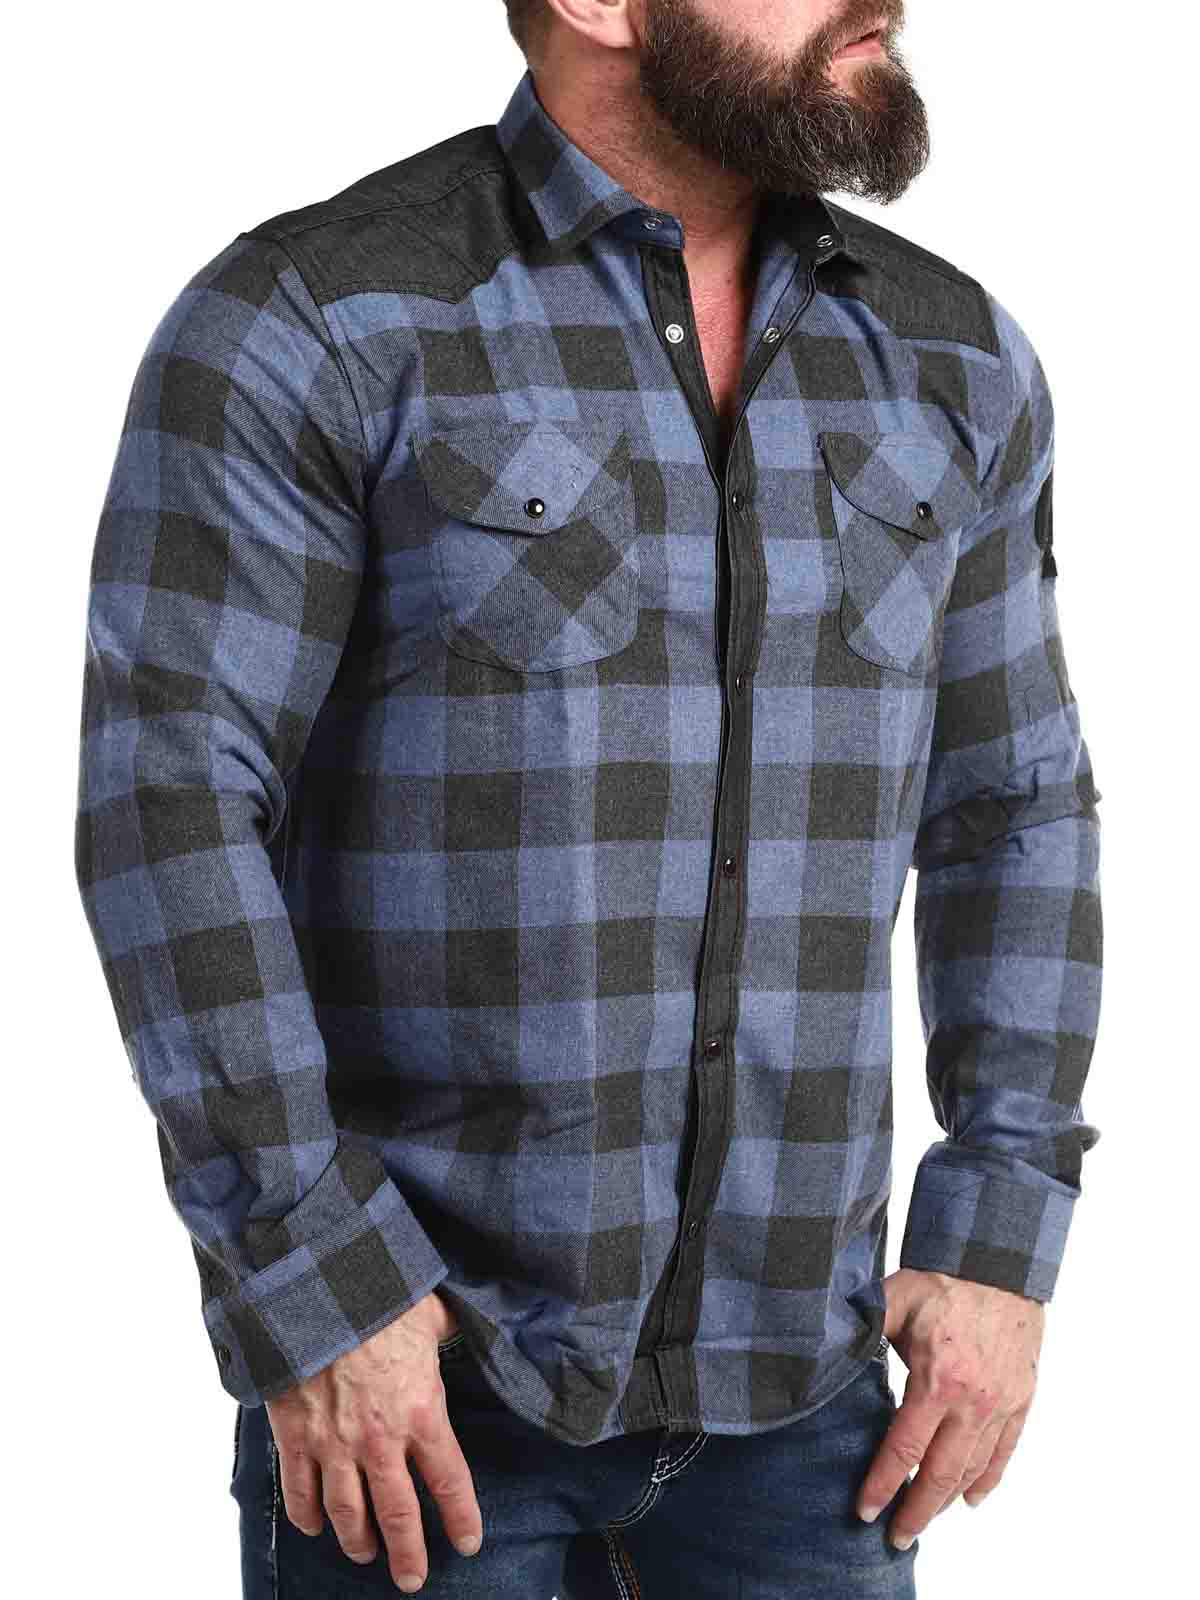 RD Lumberjack Shirt3.jpg